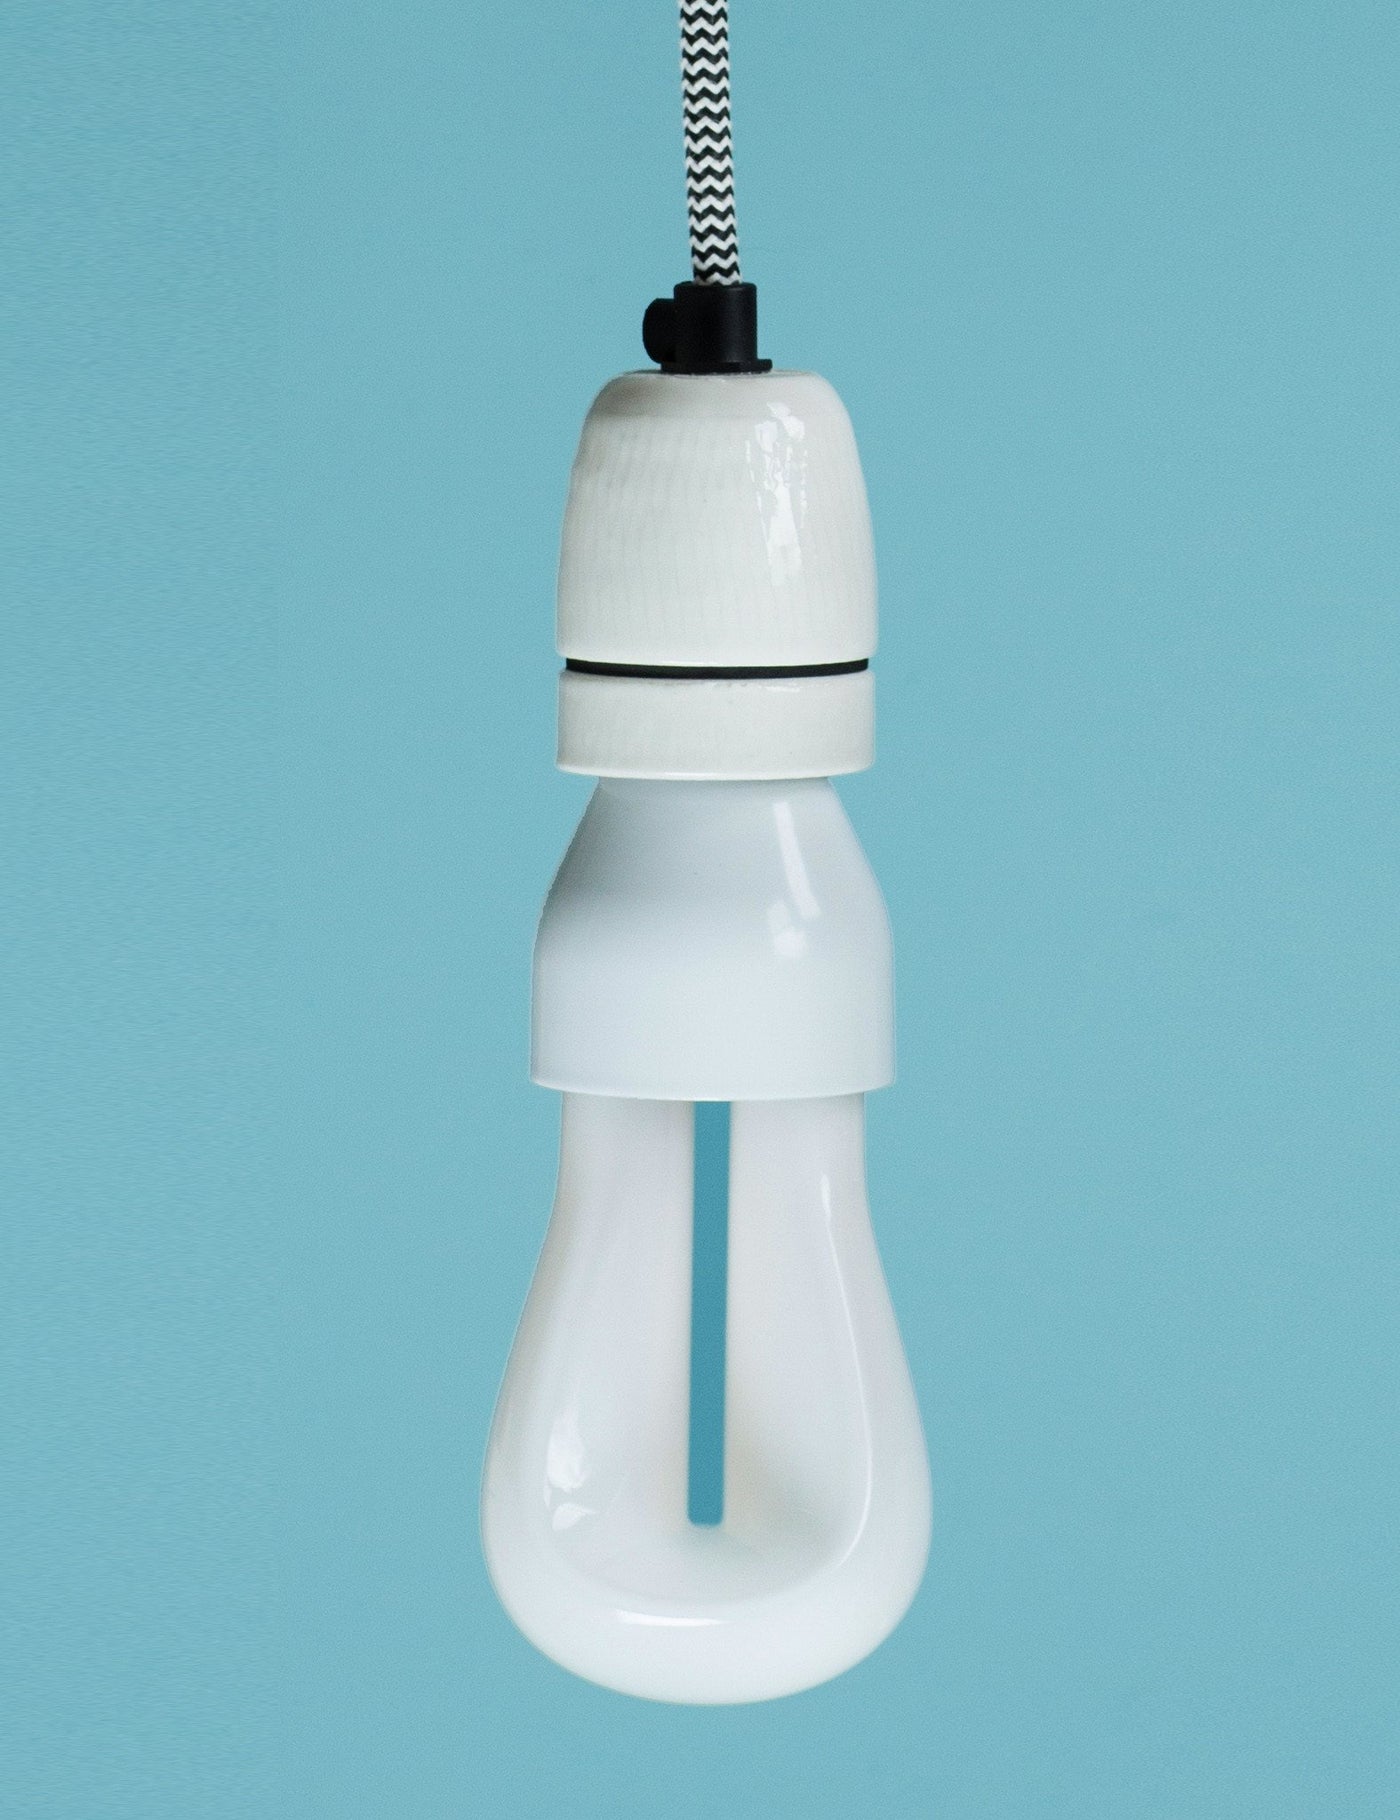 Ceramic Lamp Holder By Factorylux